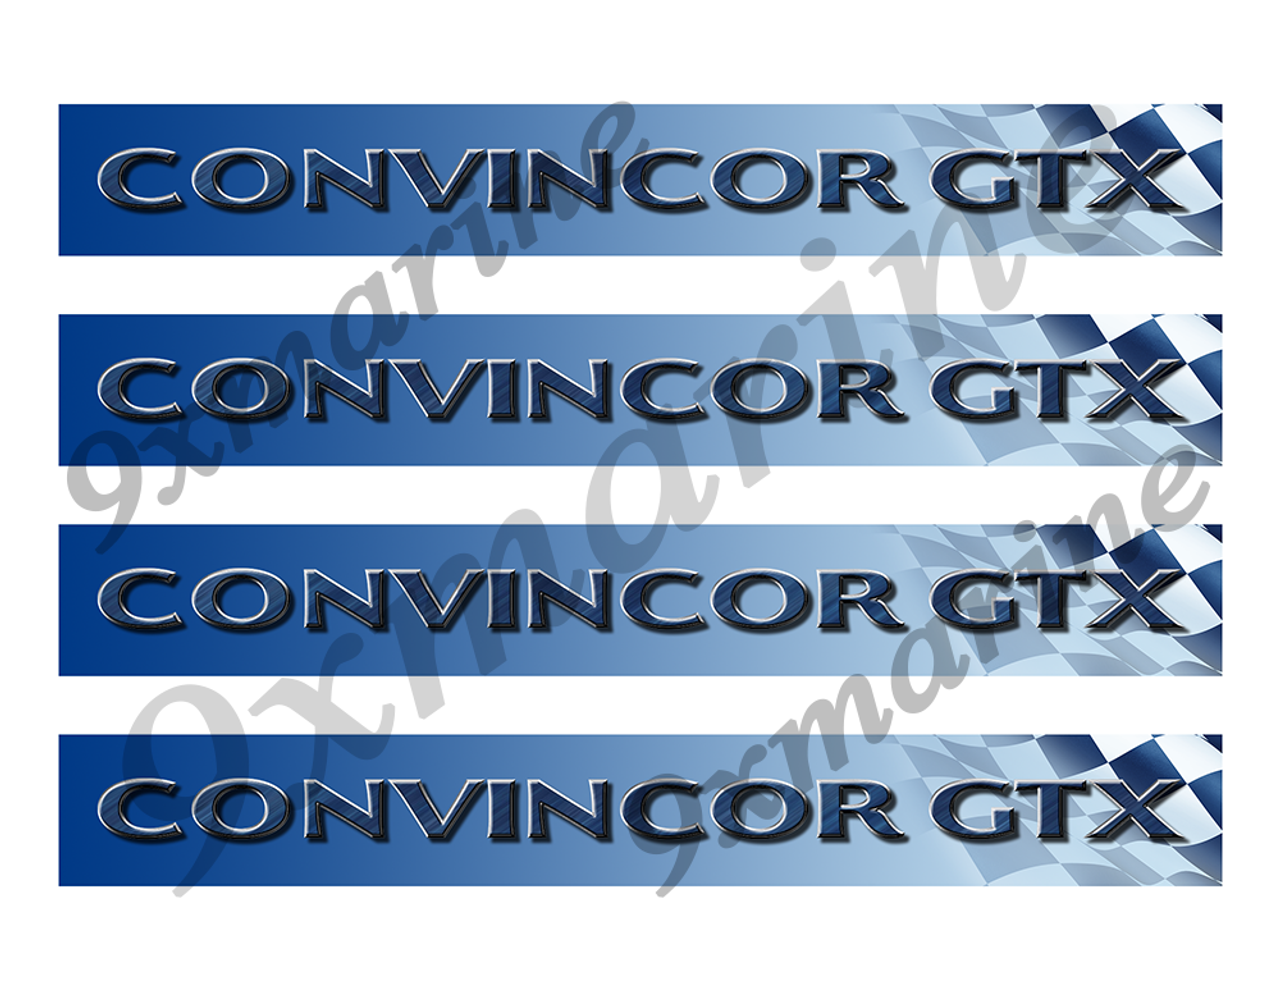 4 Convincor GTX Vinyl Stickers - 10"x1.5" each